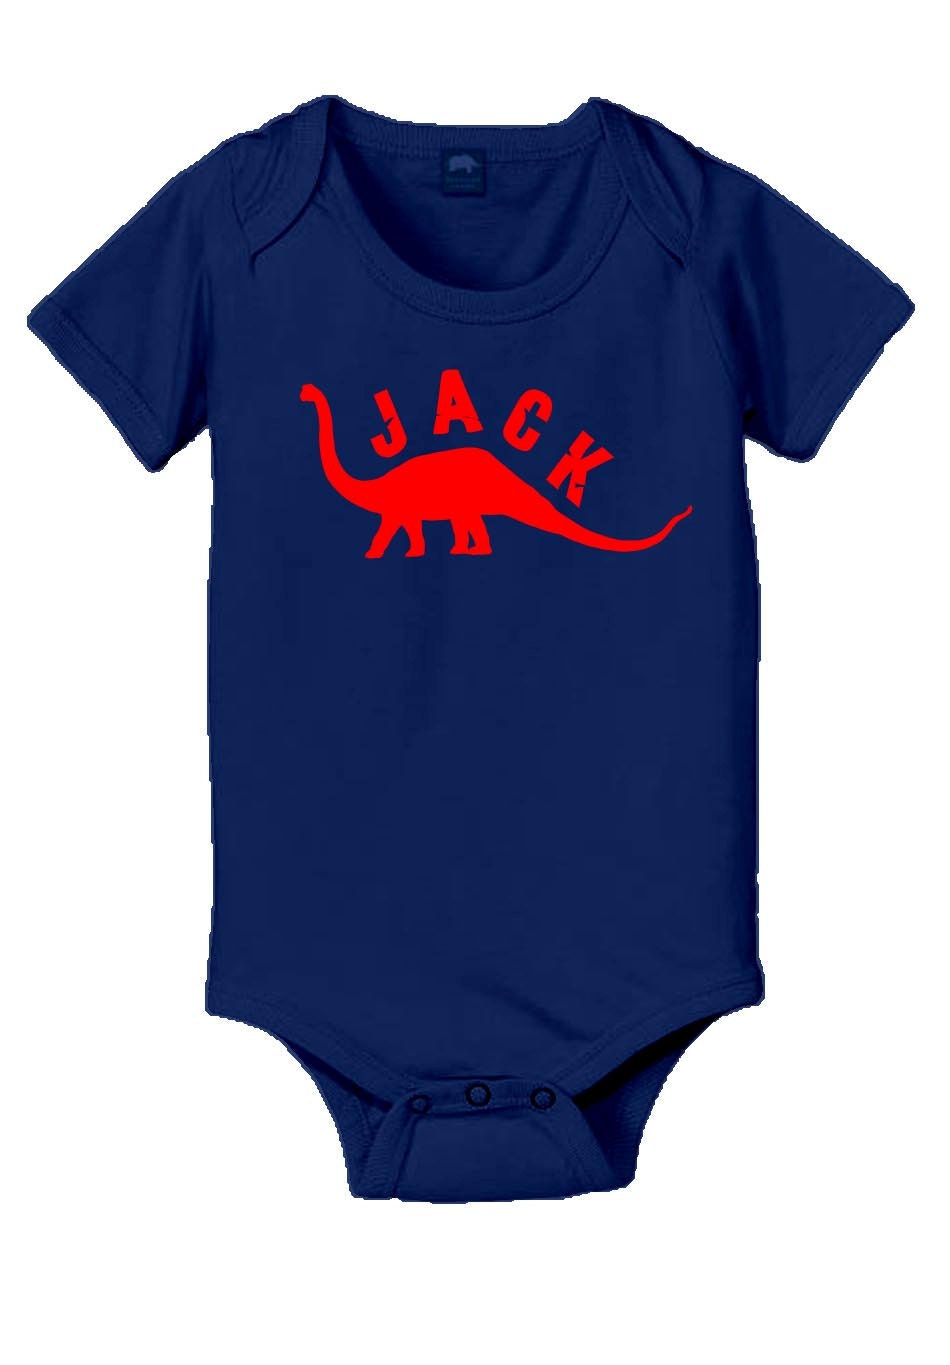 Personalized dinosaur baby onesie long-neck dinosaur